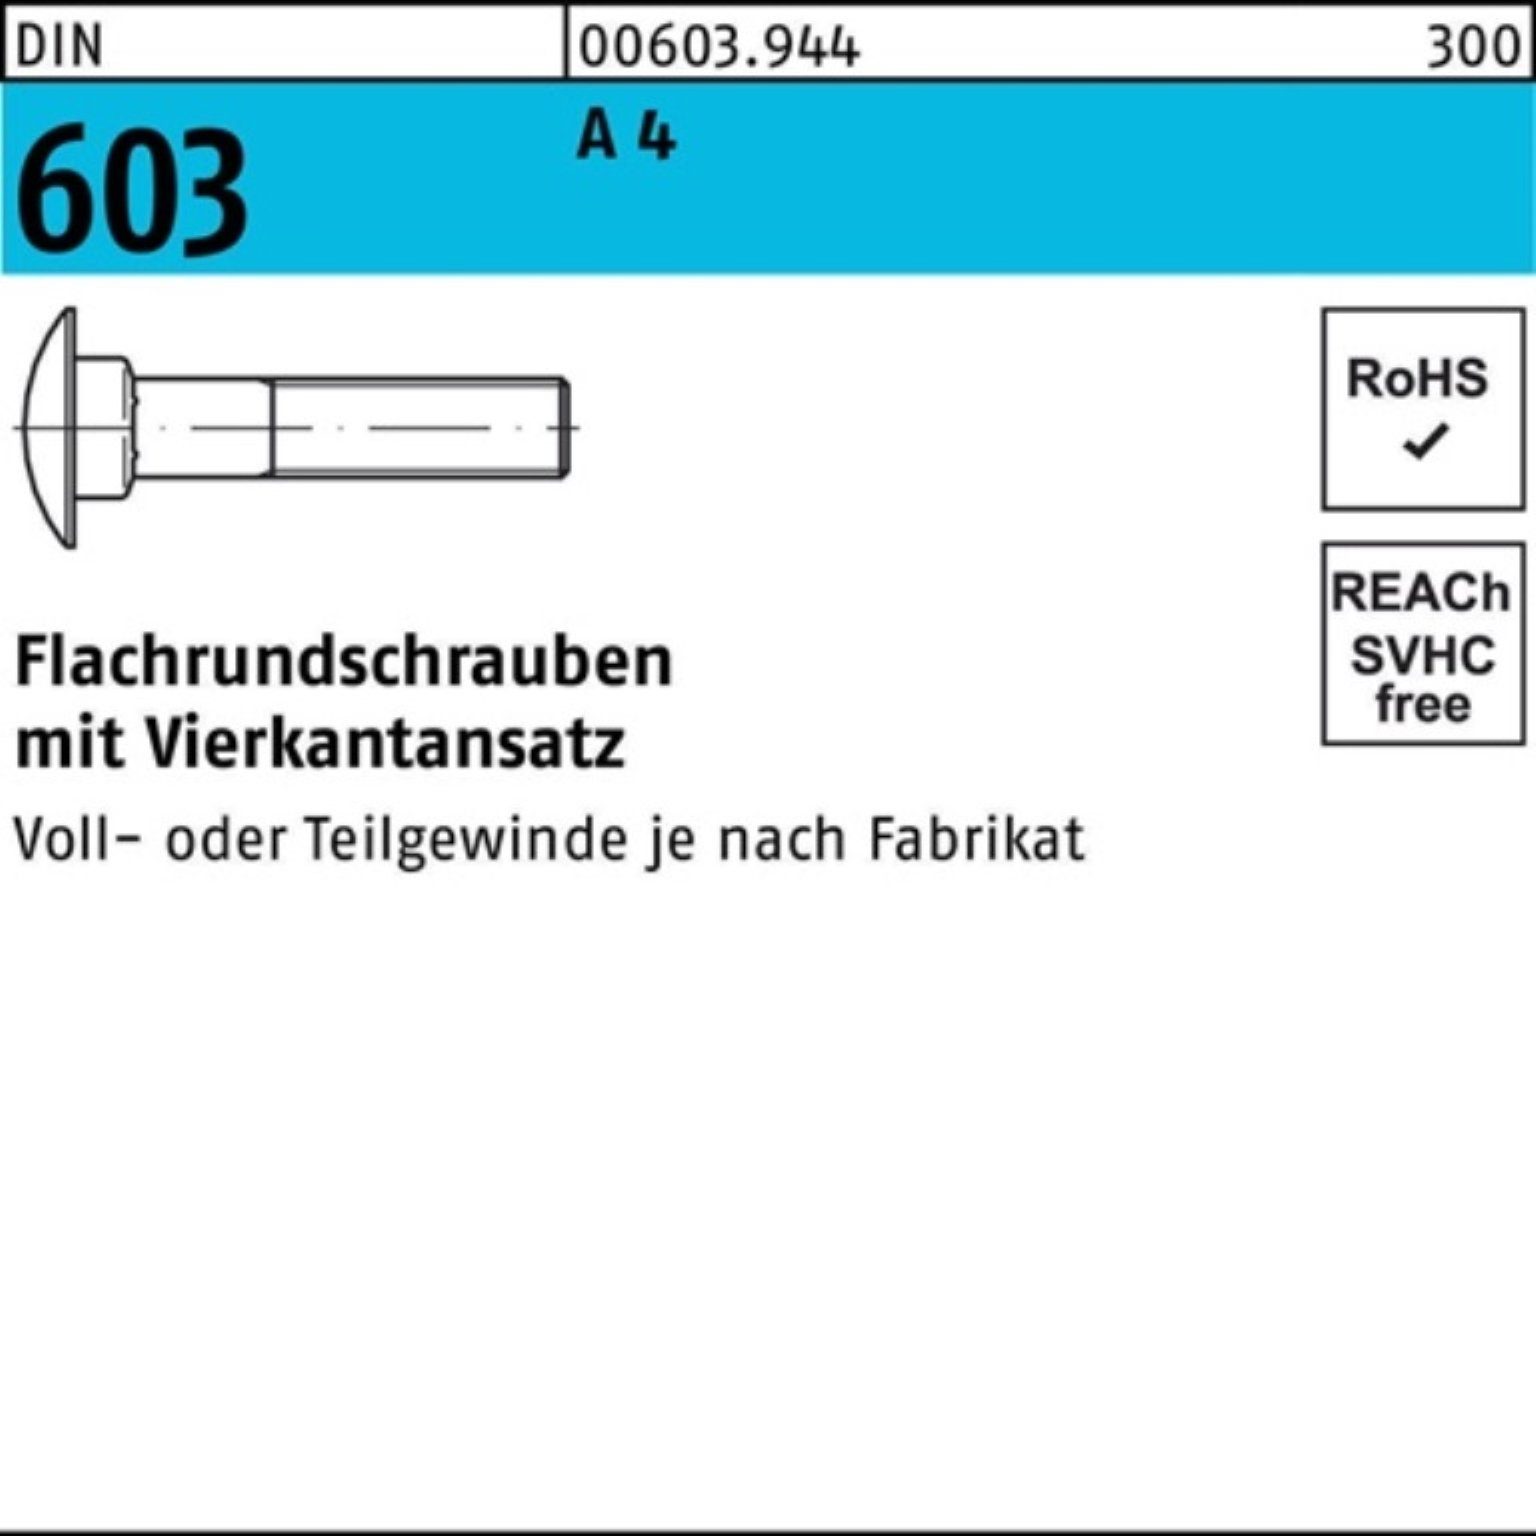 Reyher Schraube 100er Pack Flachrundschraube DIN 603 Vierkantansatz M10x 25 A 4 10 St